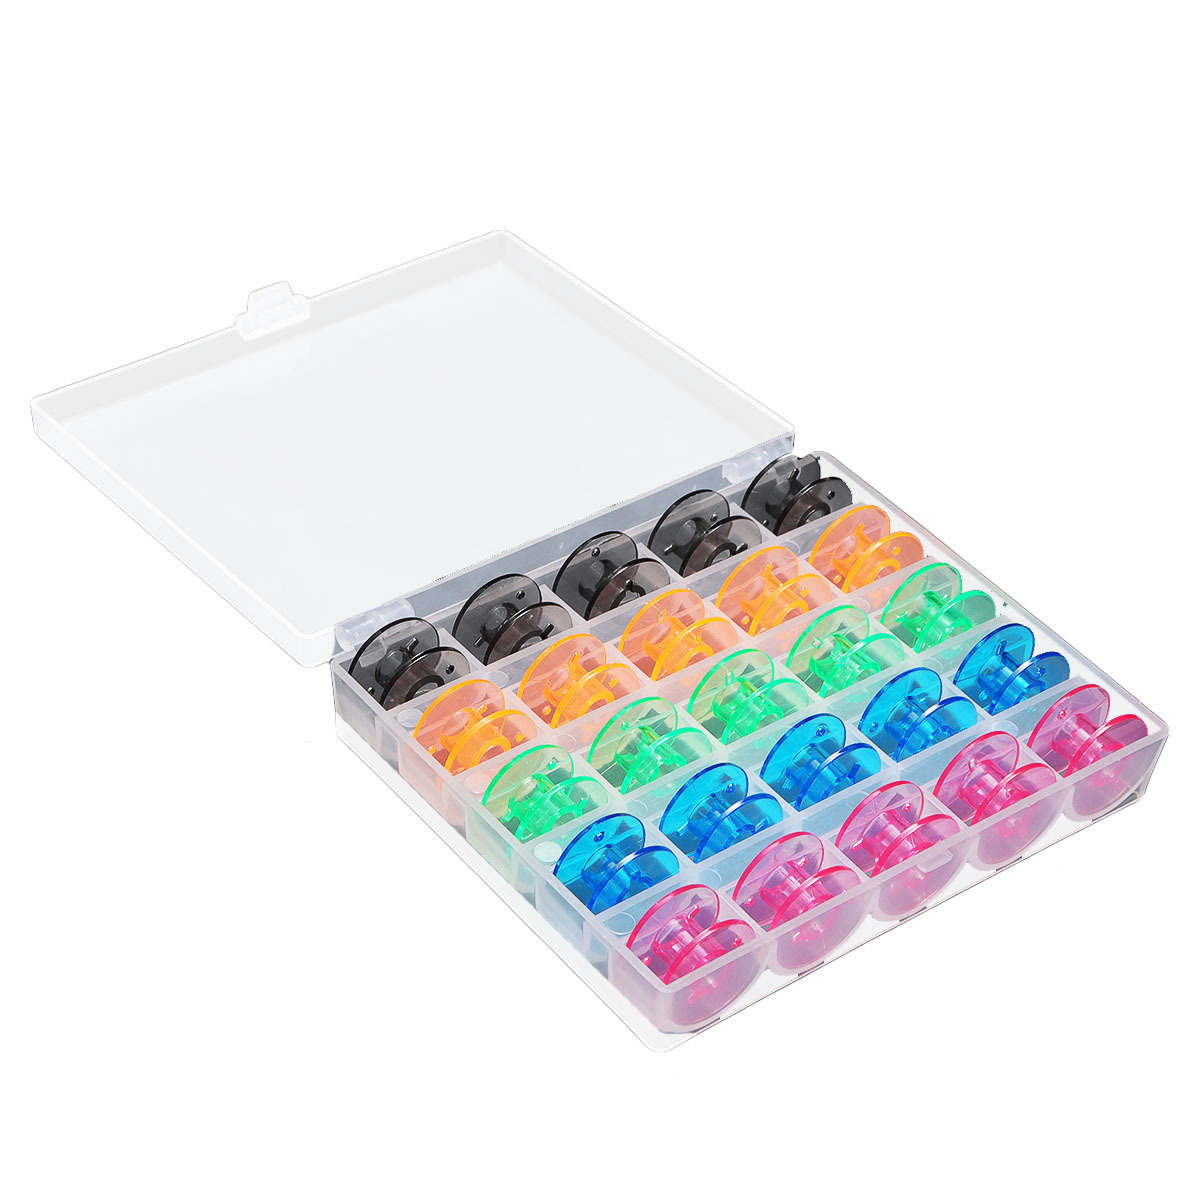 

25Pcs/Set Empty Bobbins Sewing Machine Spools Colorful Plastic Case Storage Box For Sewing Machine